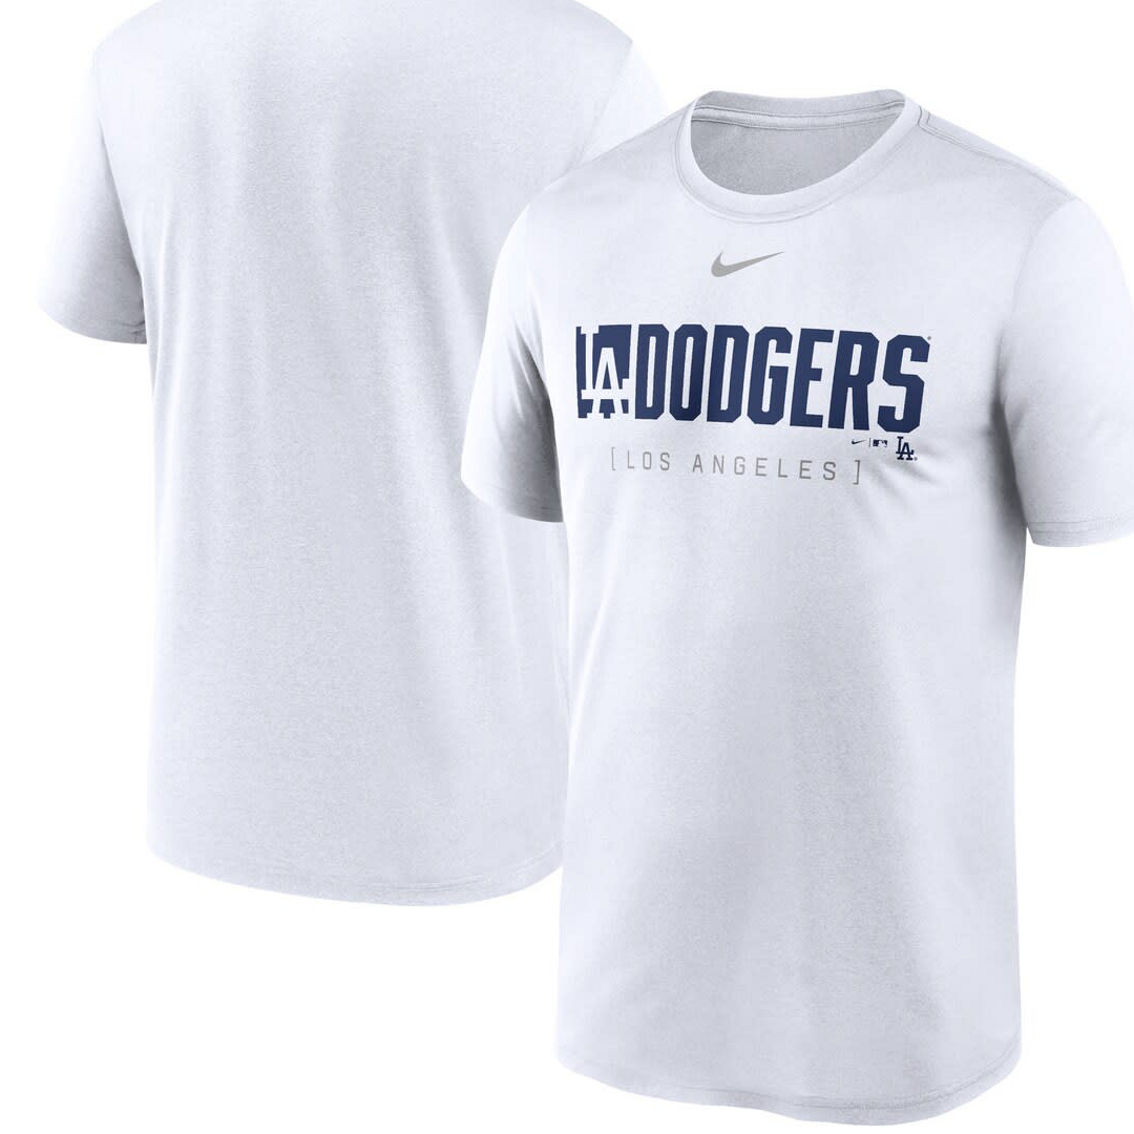 Nike Men's White Los Angeles Dodgers Knockout Legend Performance T-Shirt - Image 2 of 4